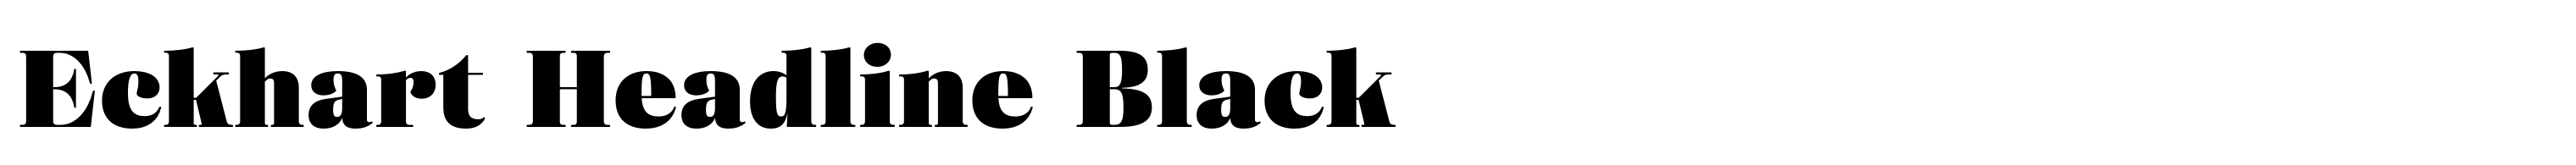 Eckhart Headline Black